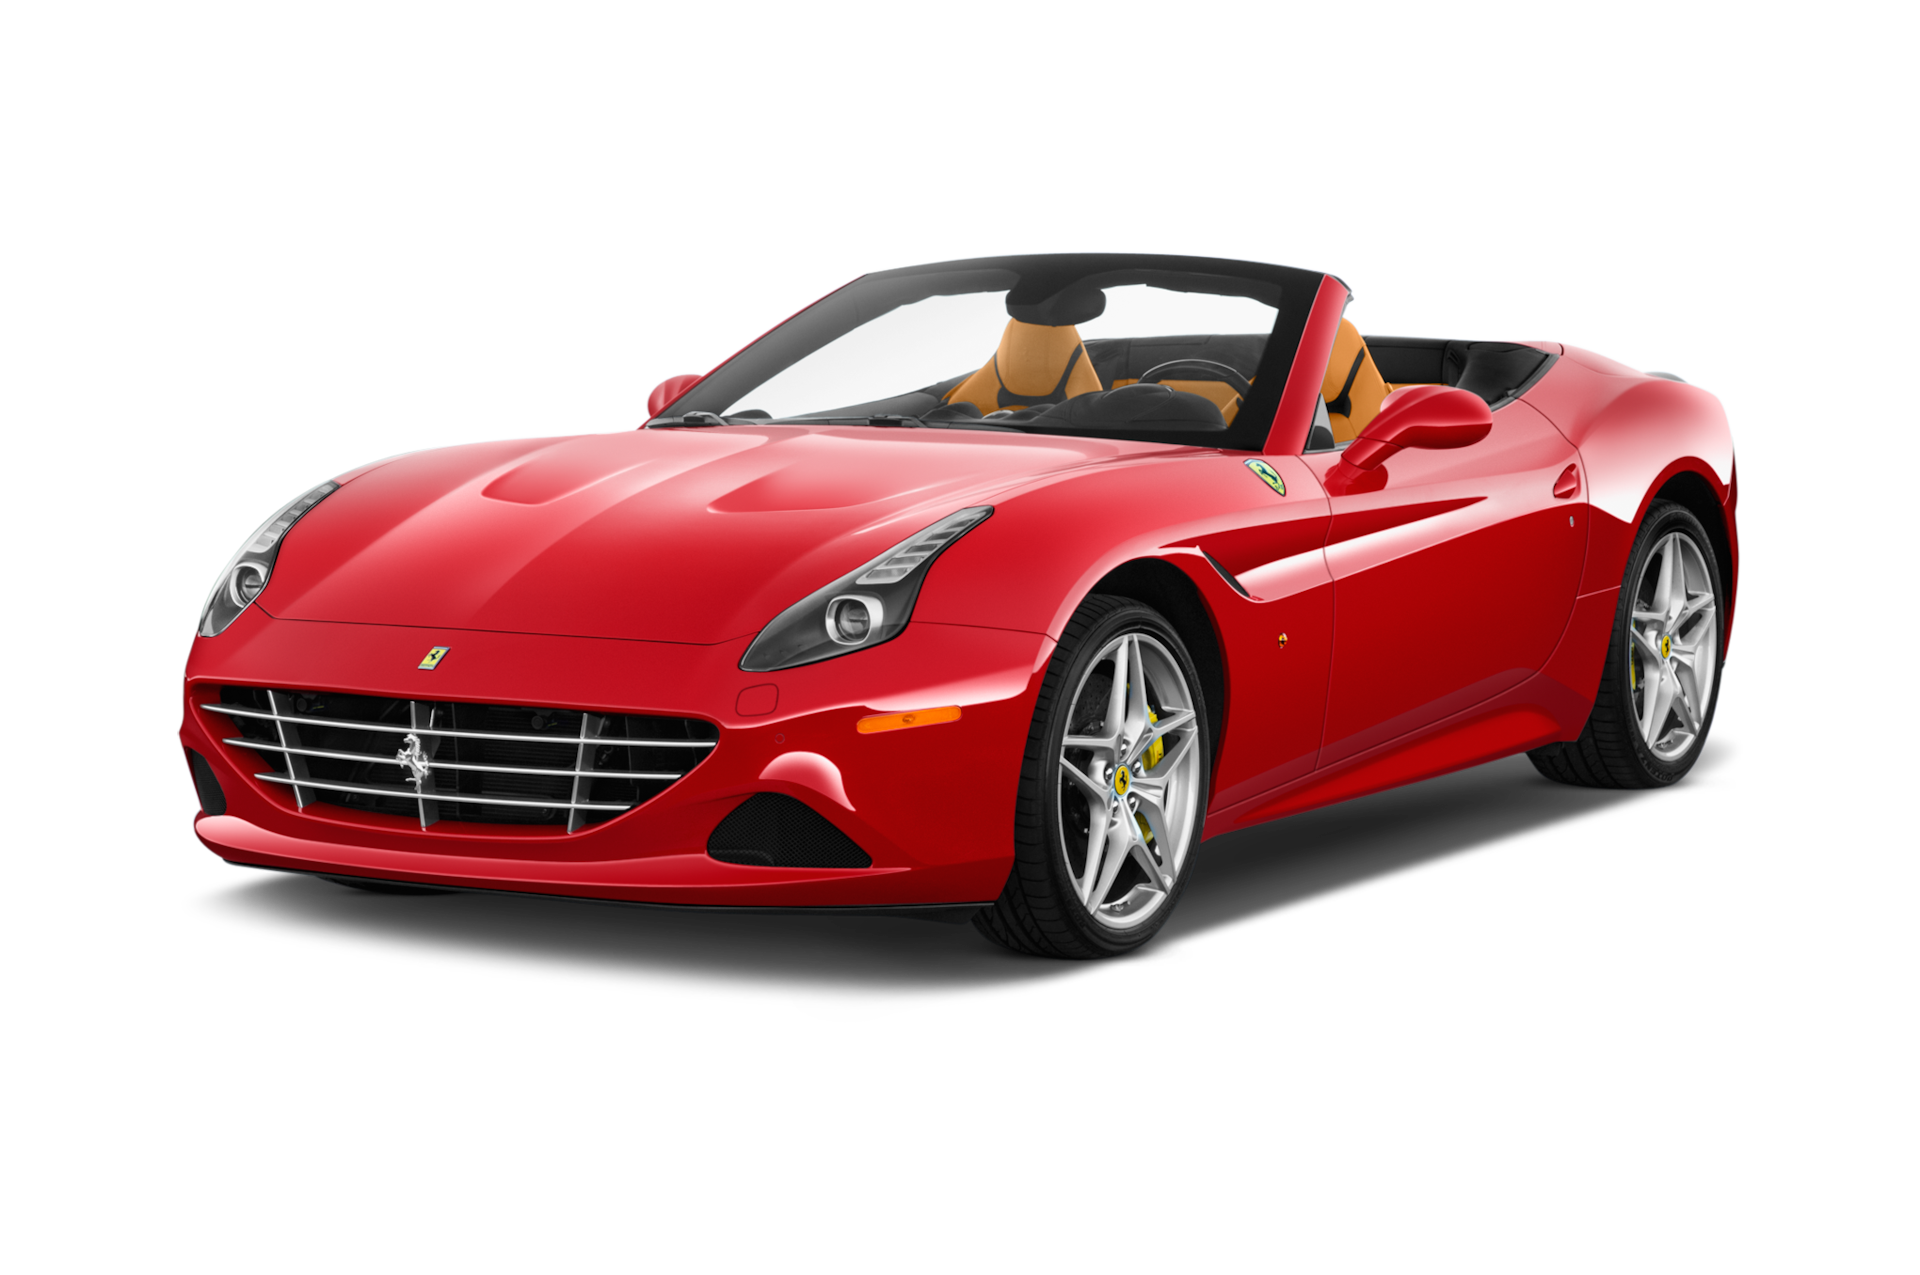 2015 Ferrari California Prices, Reviews, and Photos - MotorTrend